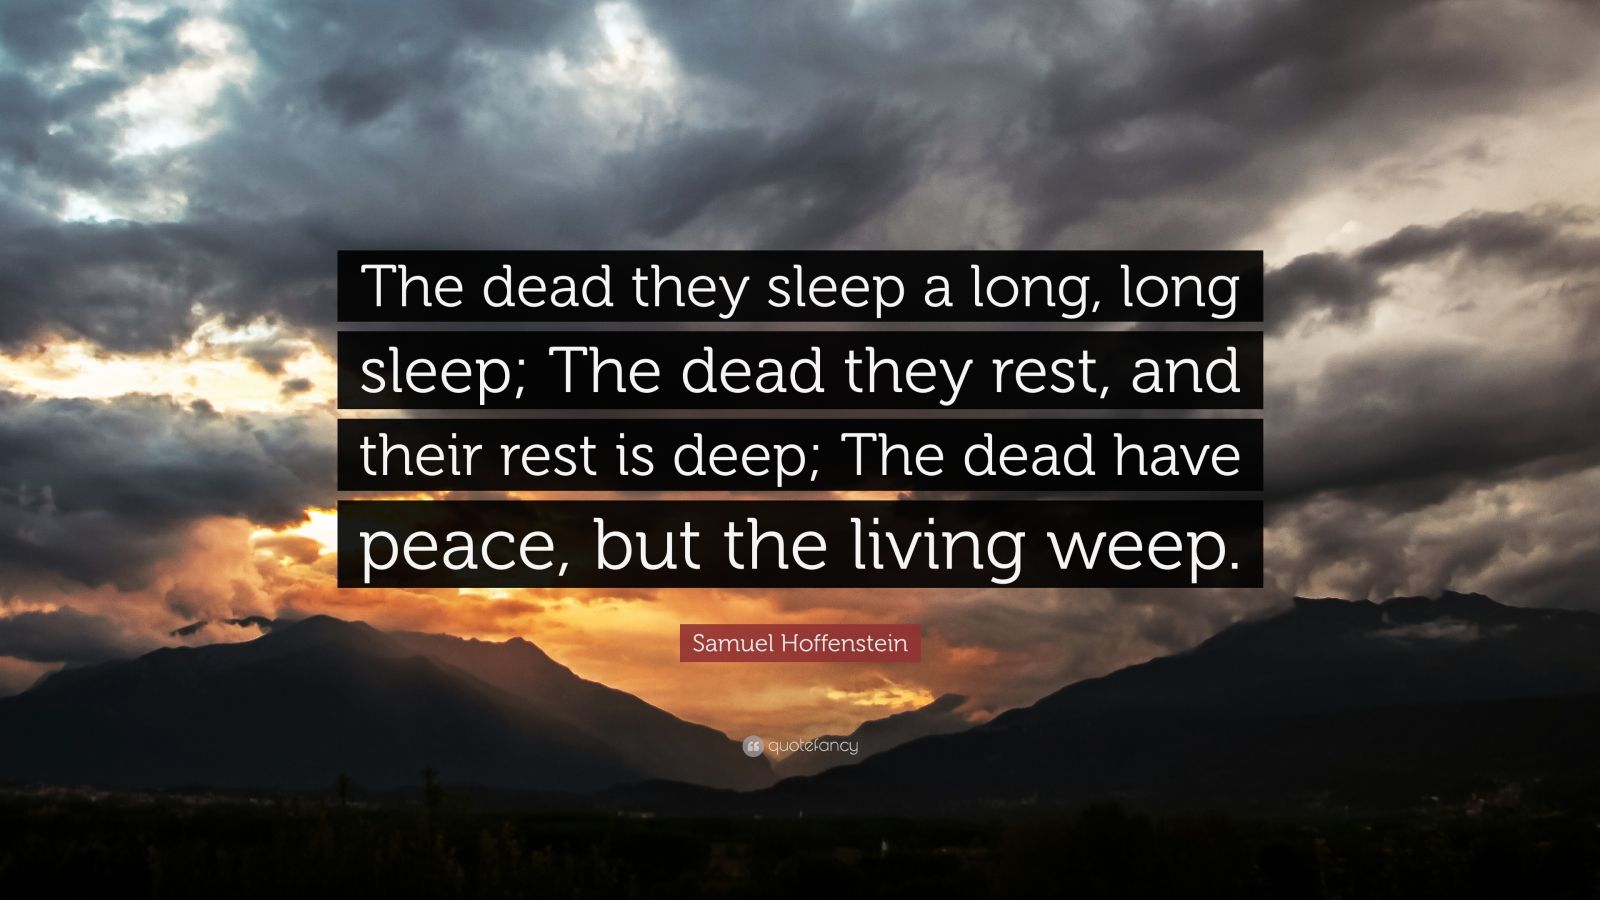 Samuel Hoffenstein Quote: “The dead they sleep a long, long sleep; The ...